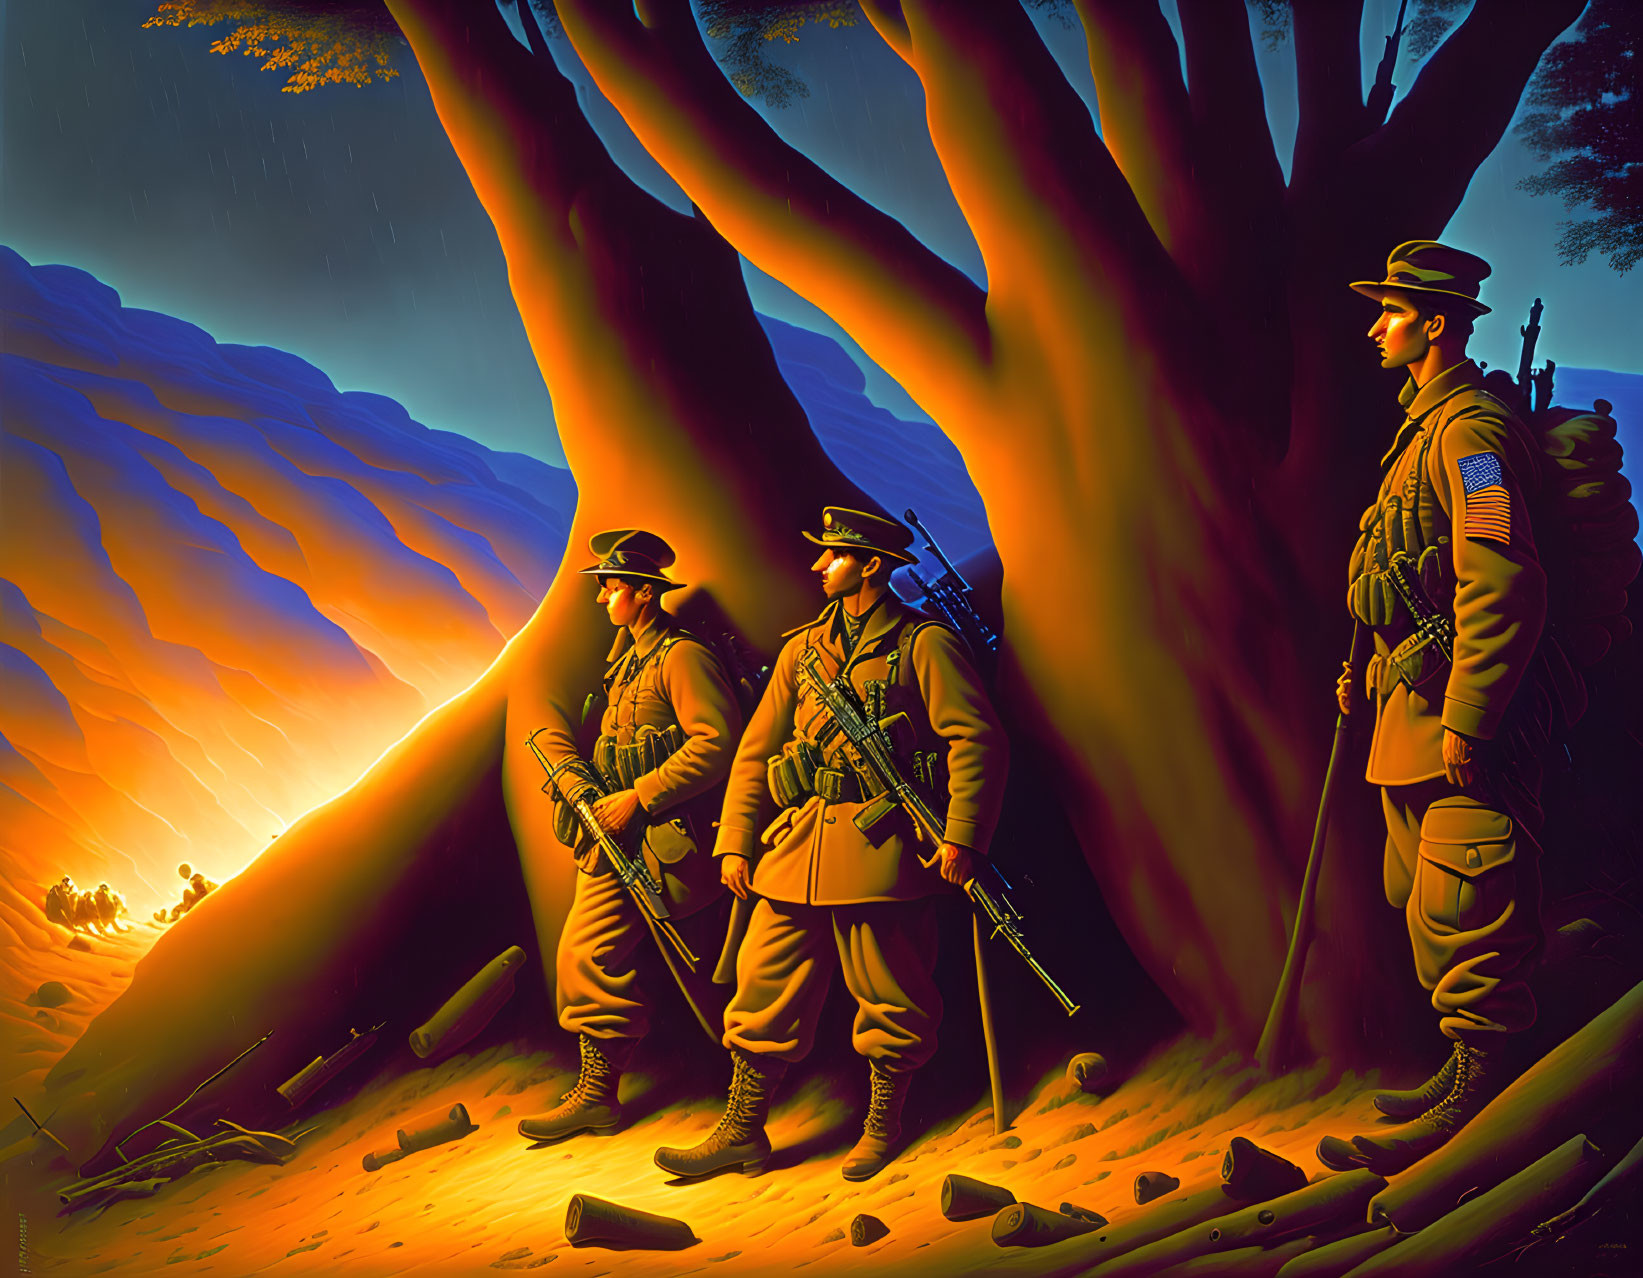 Vintage military uniforms: Three soldiers by tree in fiery battlefield scene